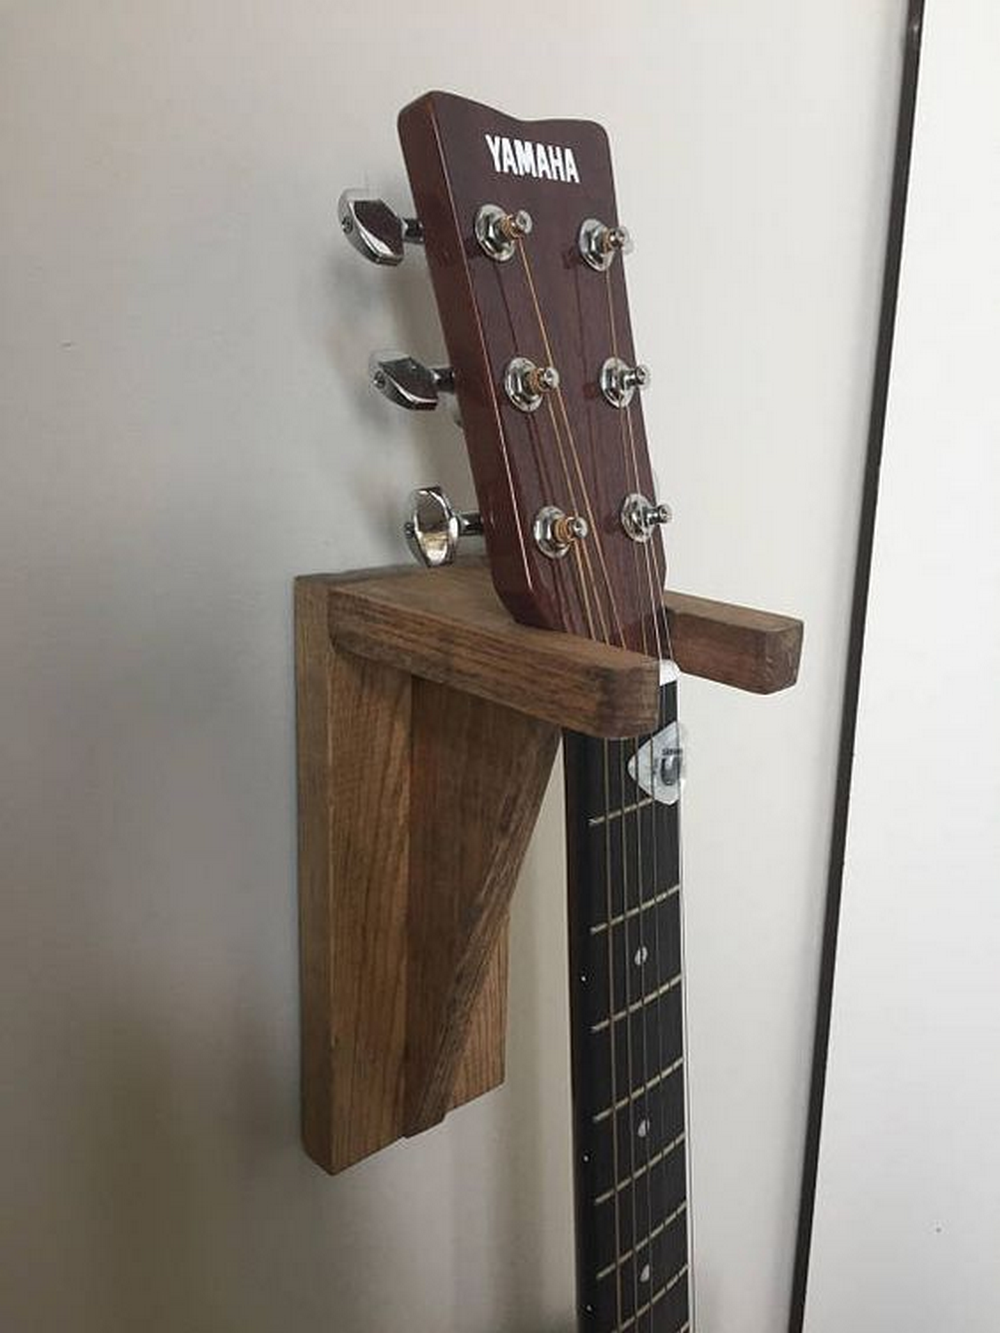 The impressively simple Guitar Hanger